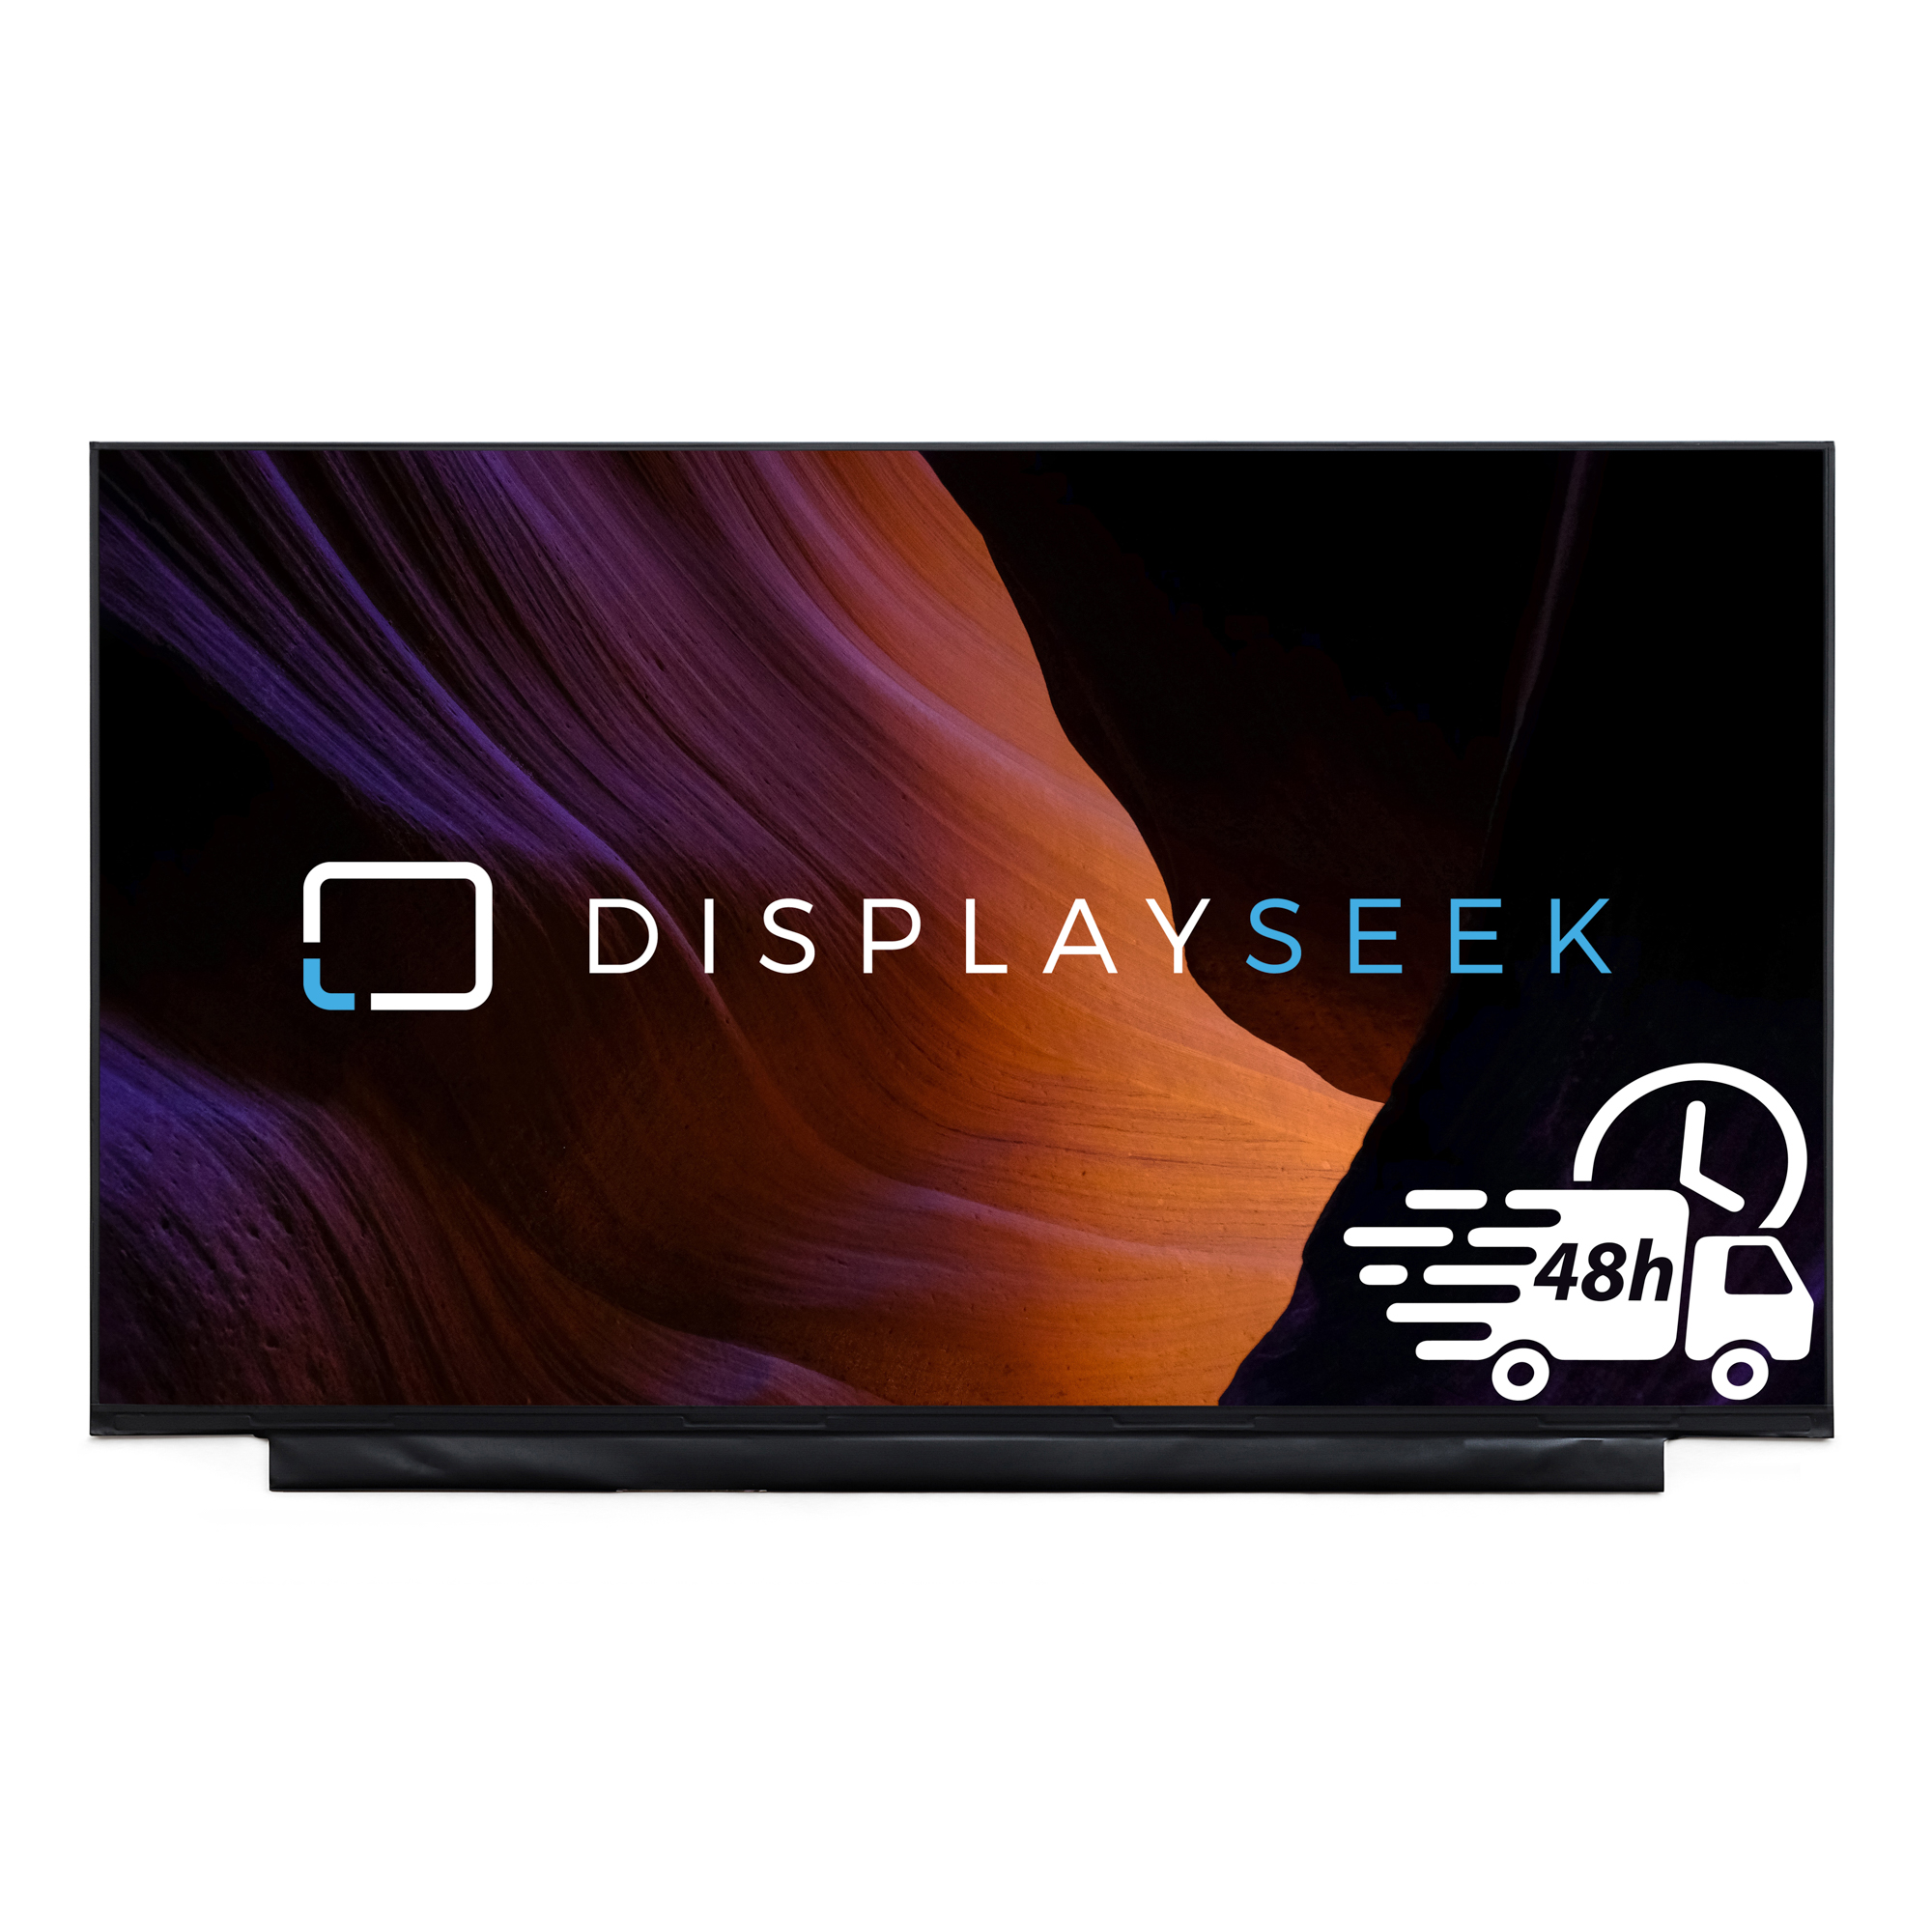 Asus TUF 505G LCD 15.6" FHD Display Dalle Ecran Livraison 24h